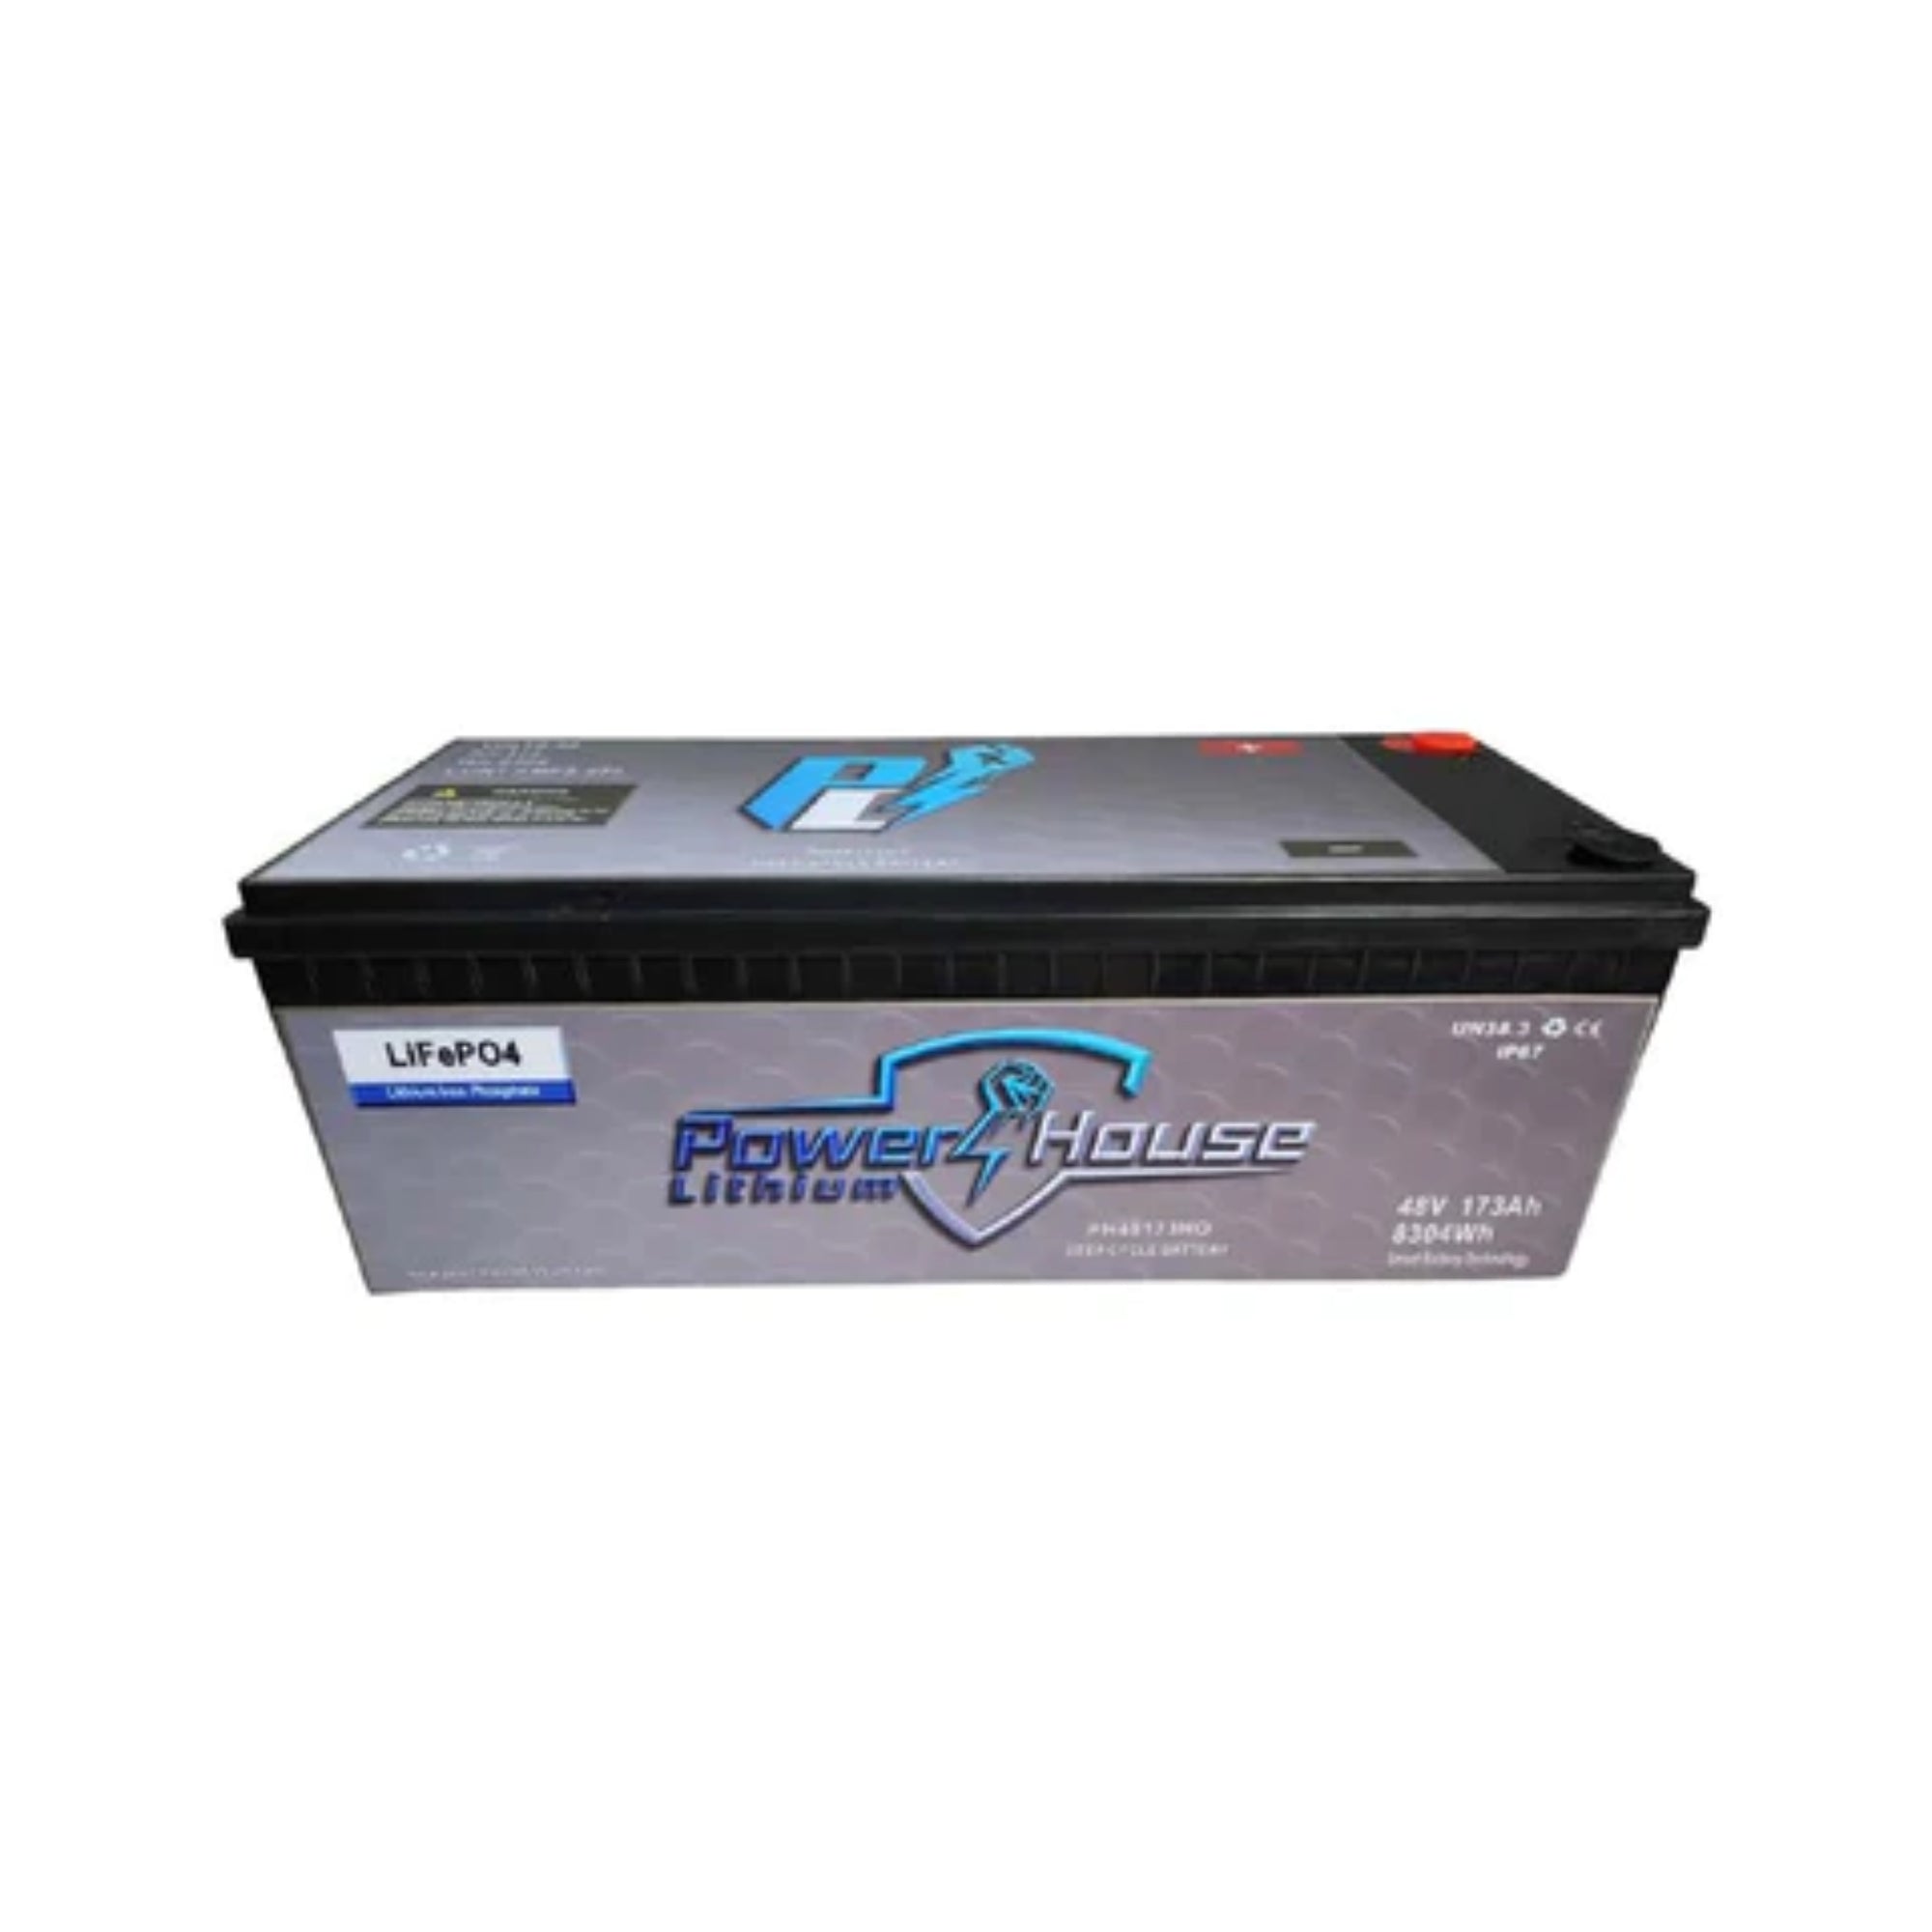 PowerHouse Lithium 48V 173Ah Deep Cycle Battery (Free Heavy Duty Tray Included)